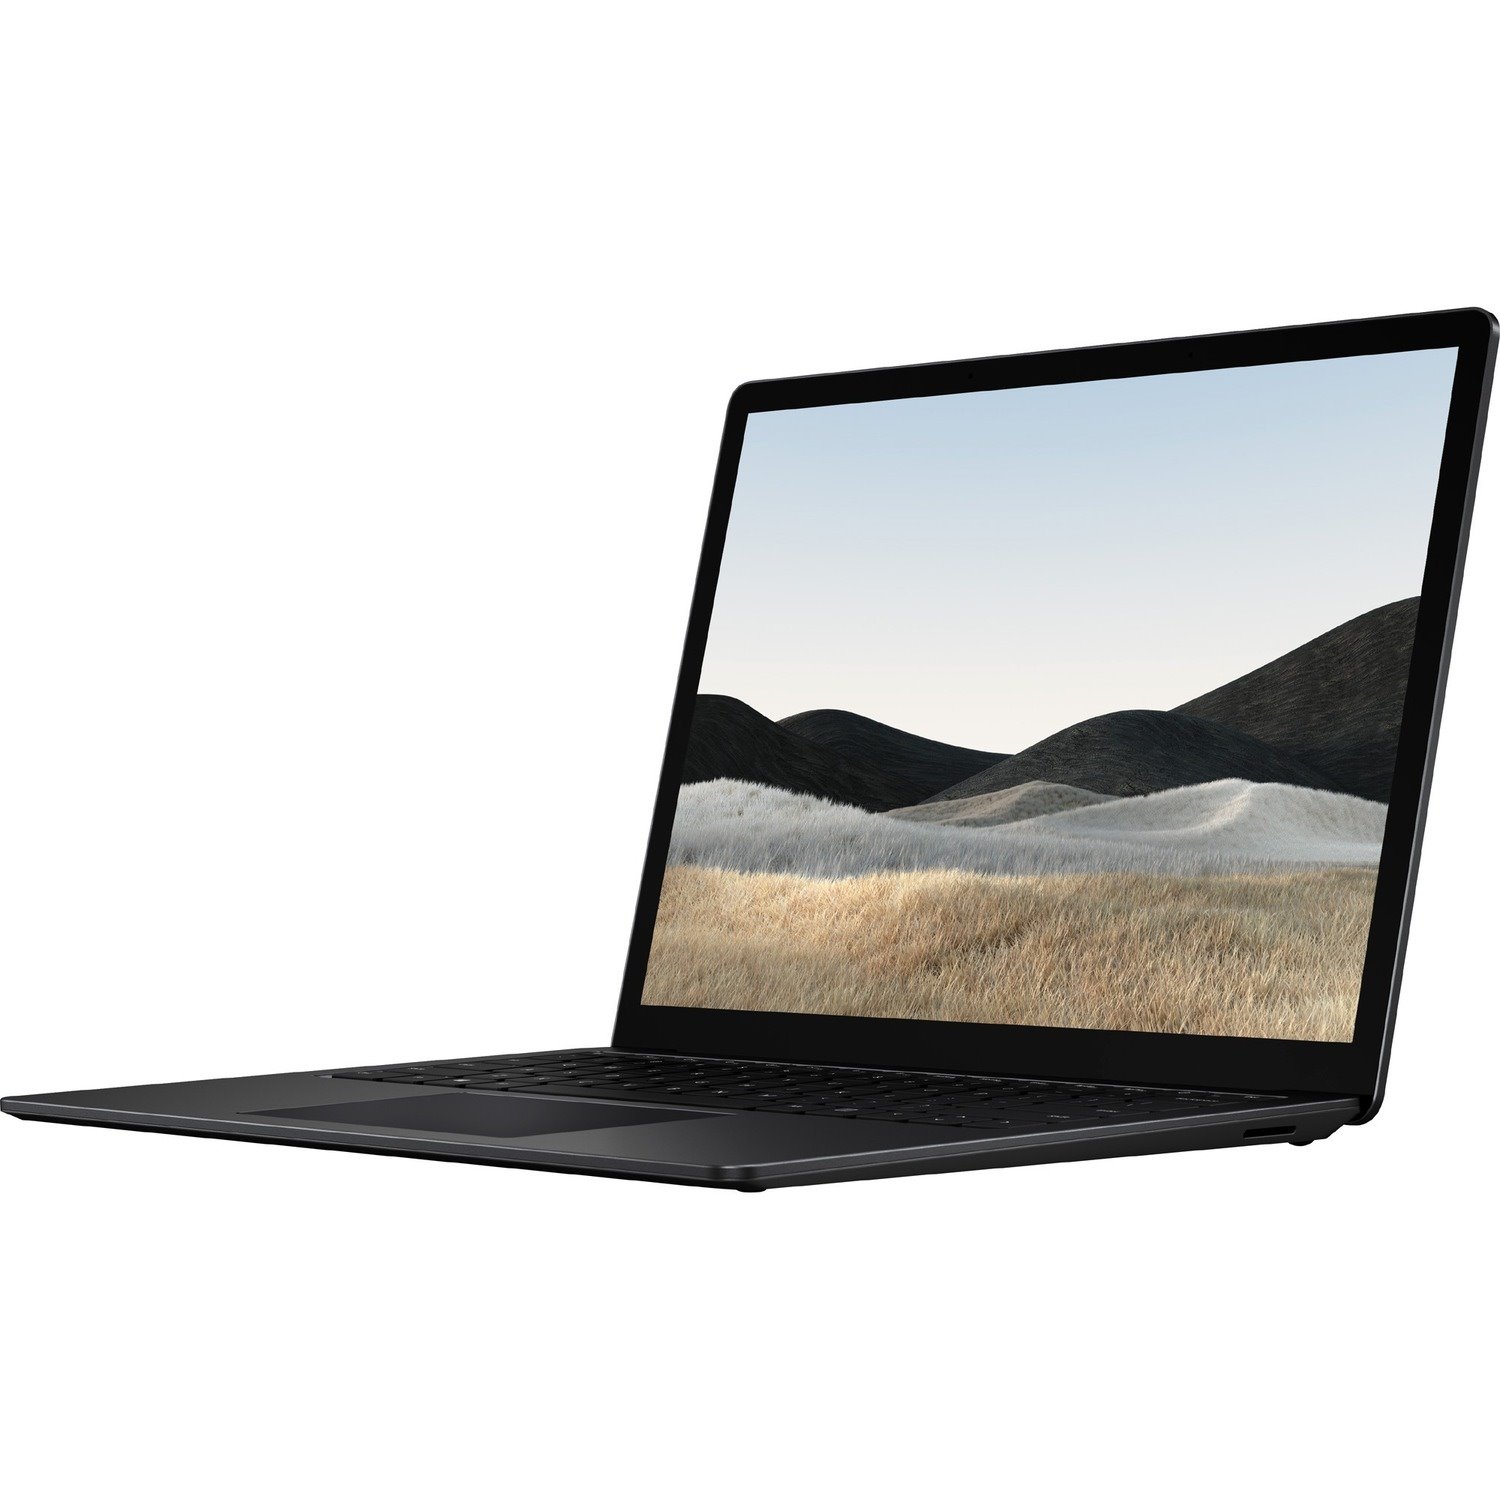 Microsoft Surface Laptop 4 34.3 cm (13.5") Touchscreen Notebook - 2256 x 1504 - Intel Core i5 - 16 GB Total RAM - 512 GB SSD - Matte Black